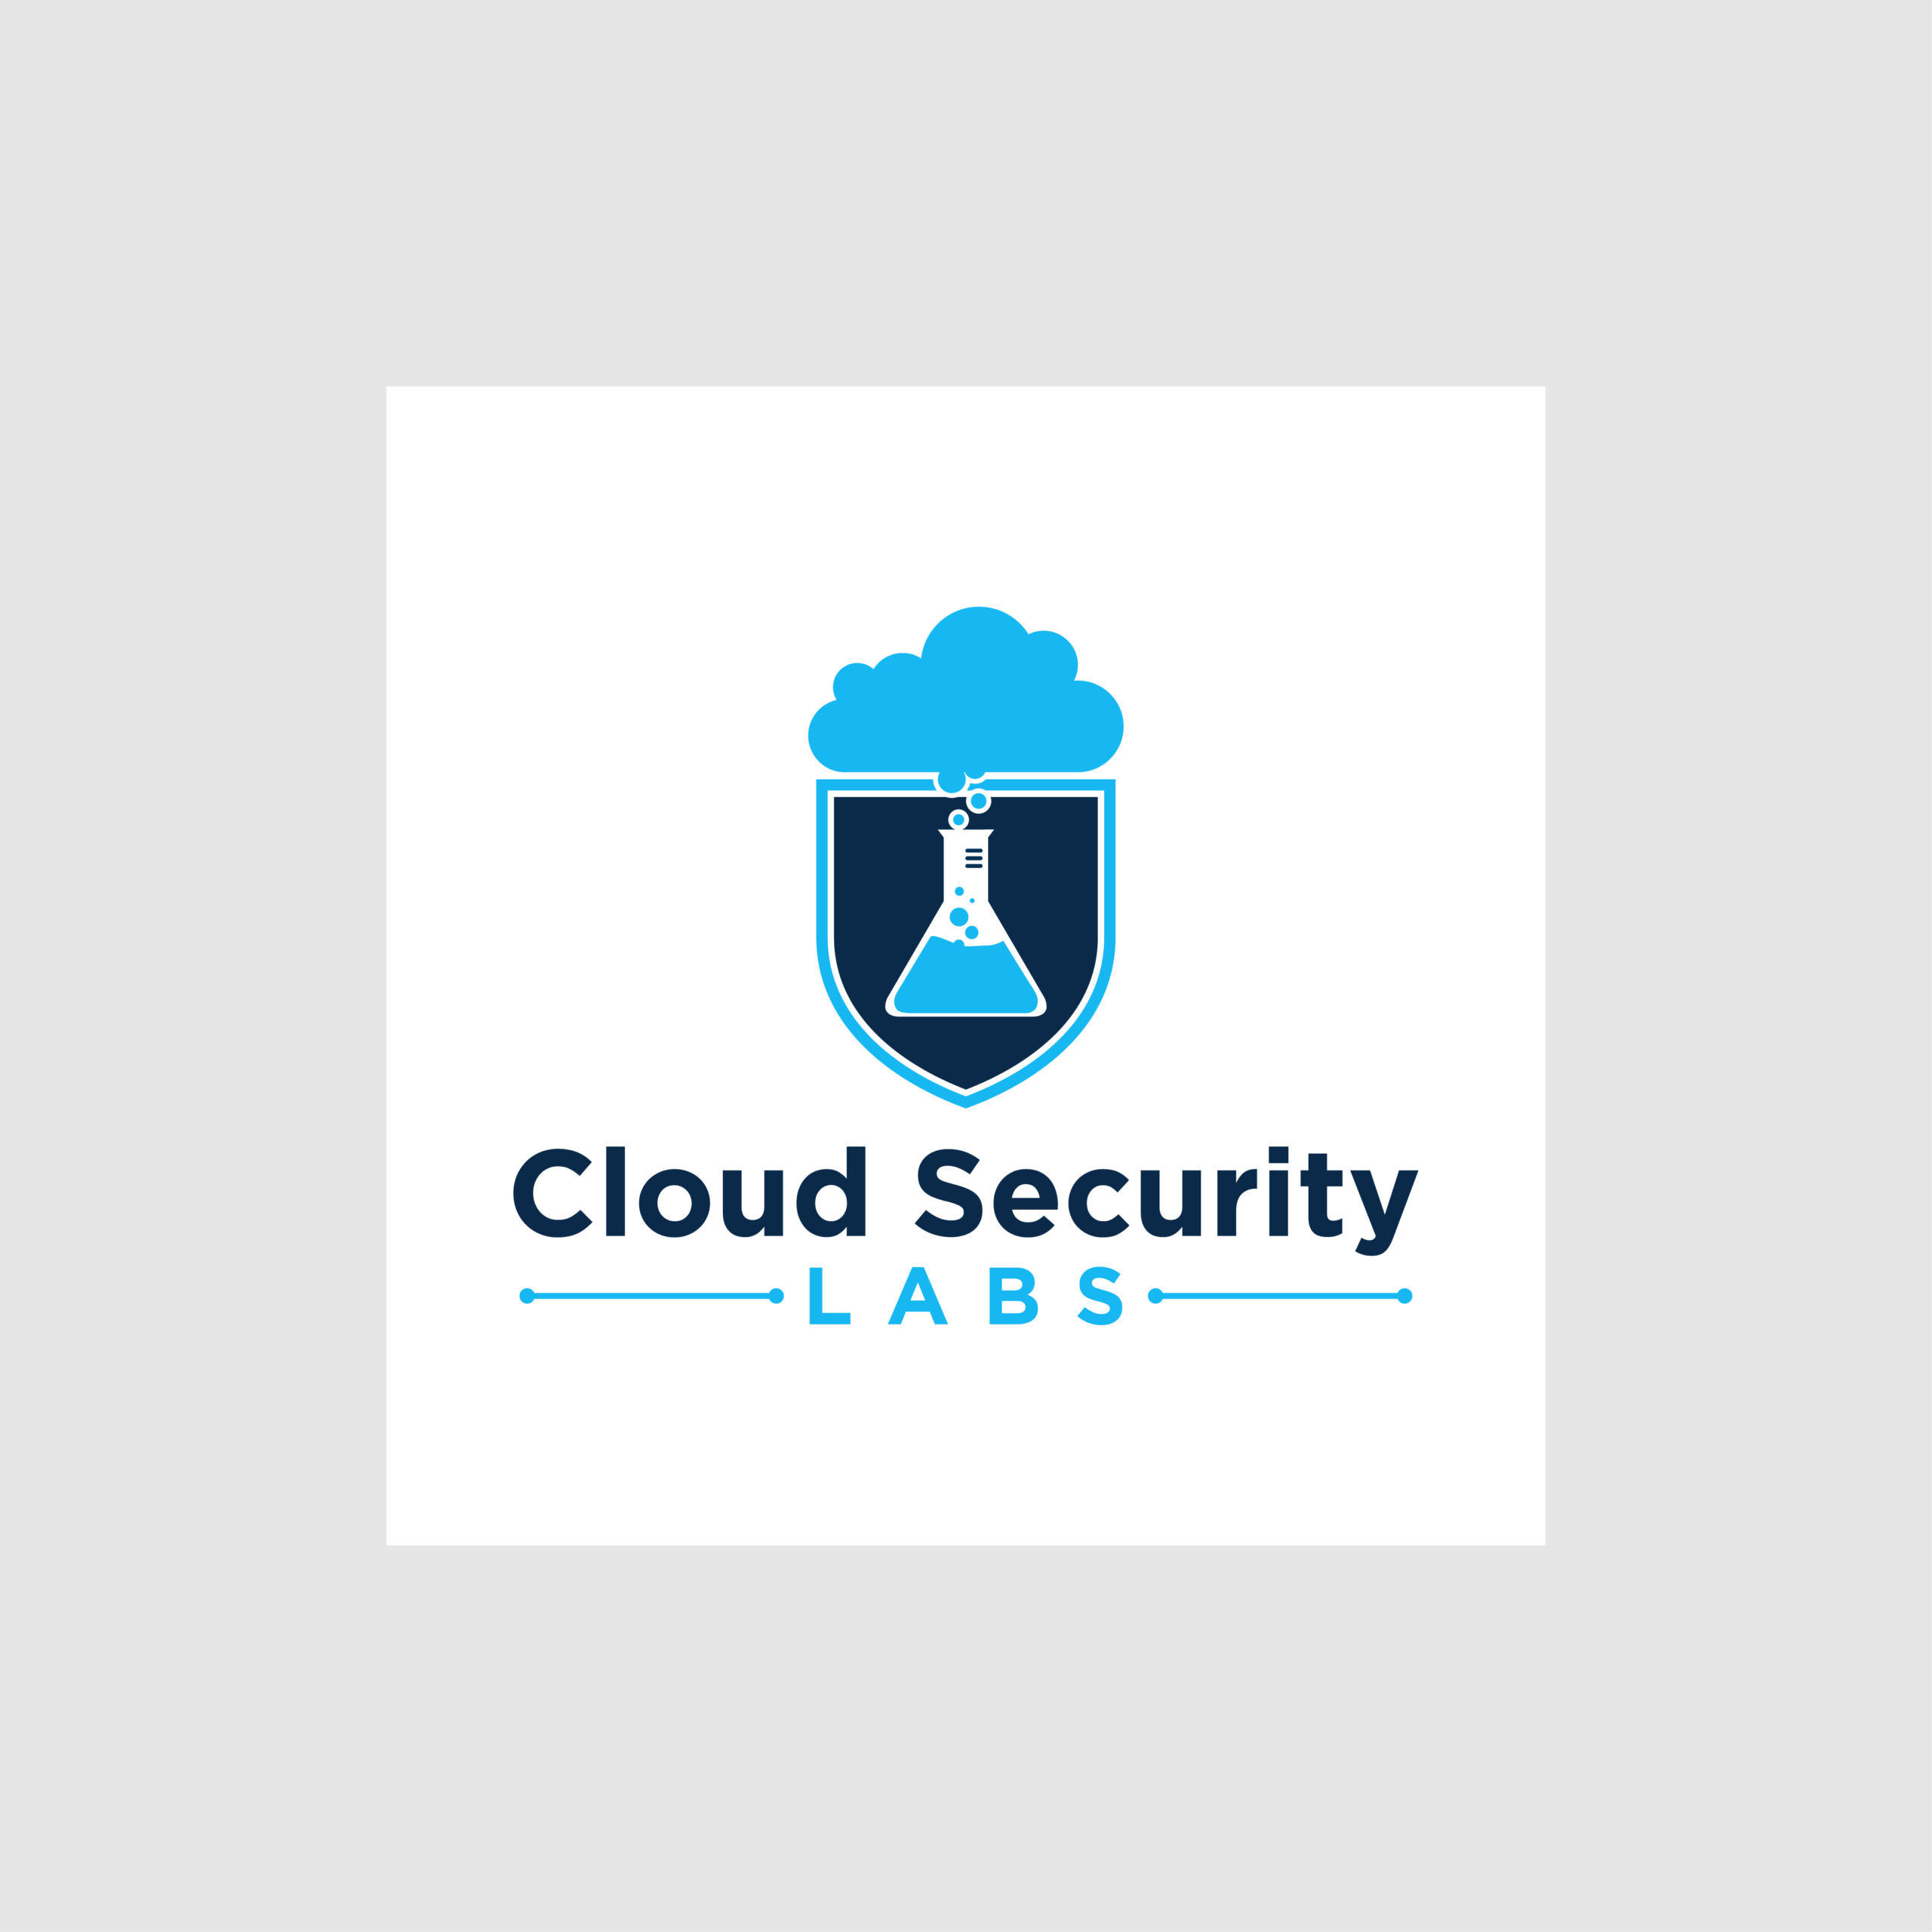 Cloud Security Labs